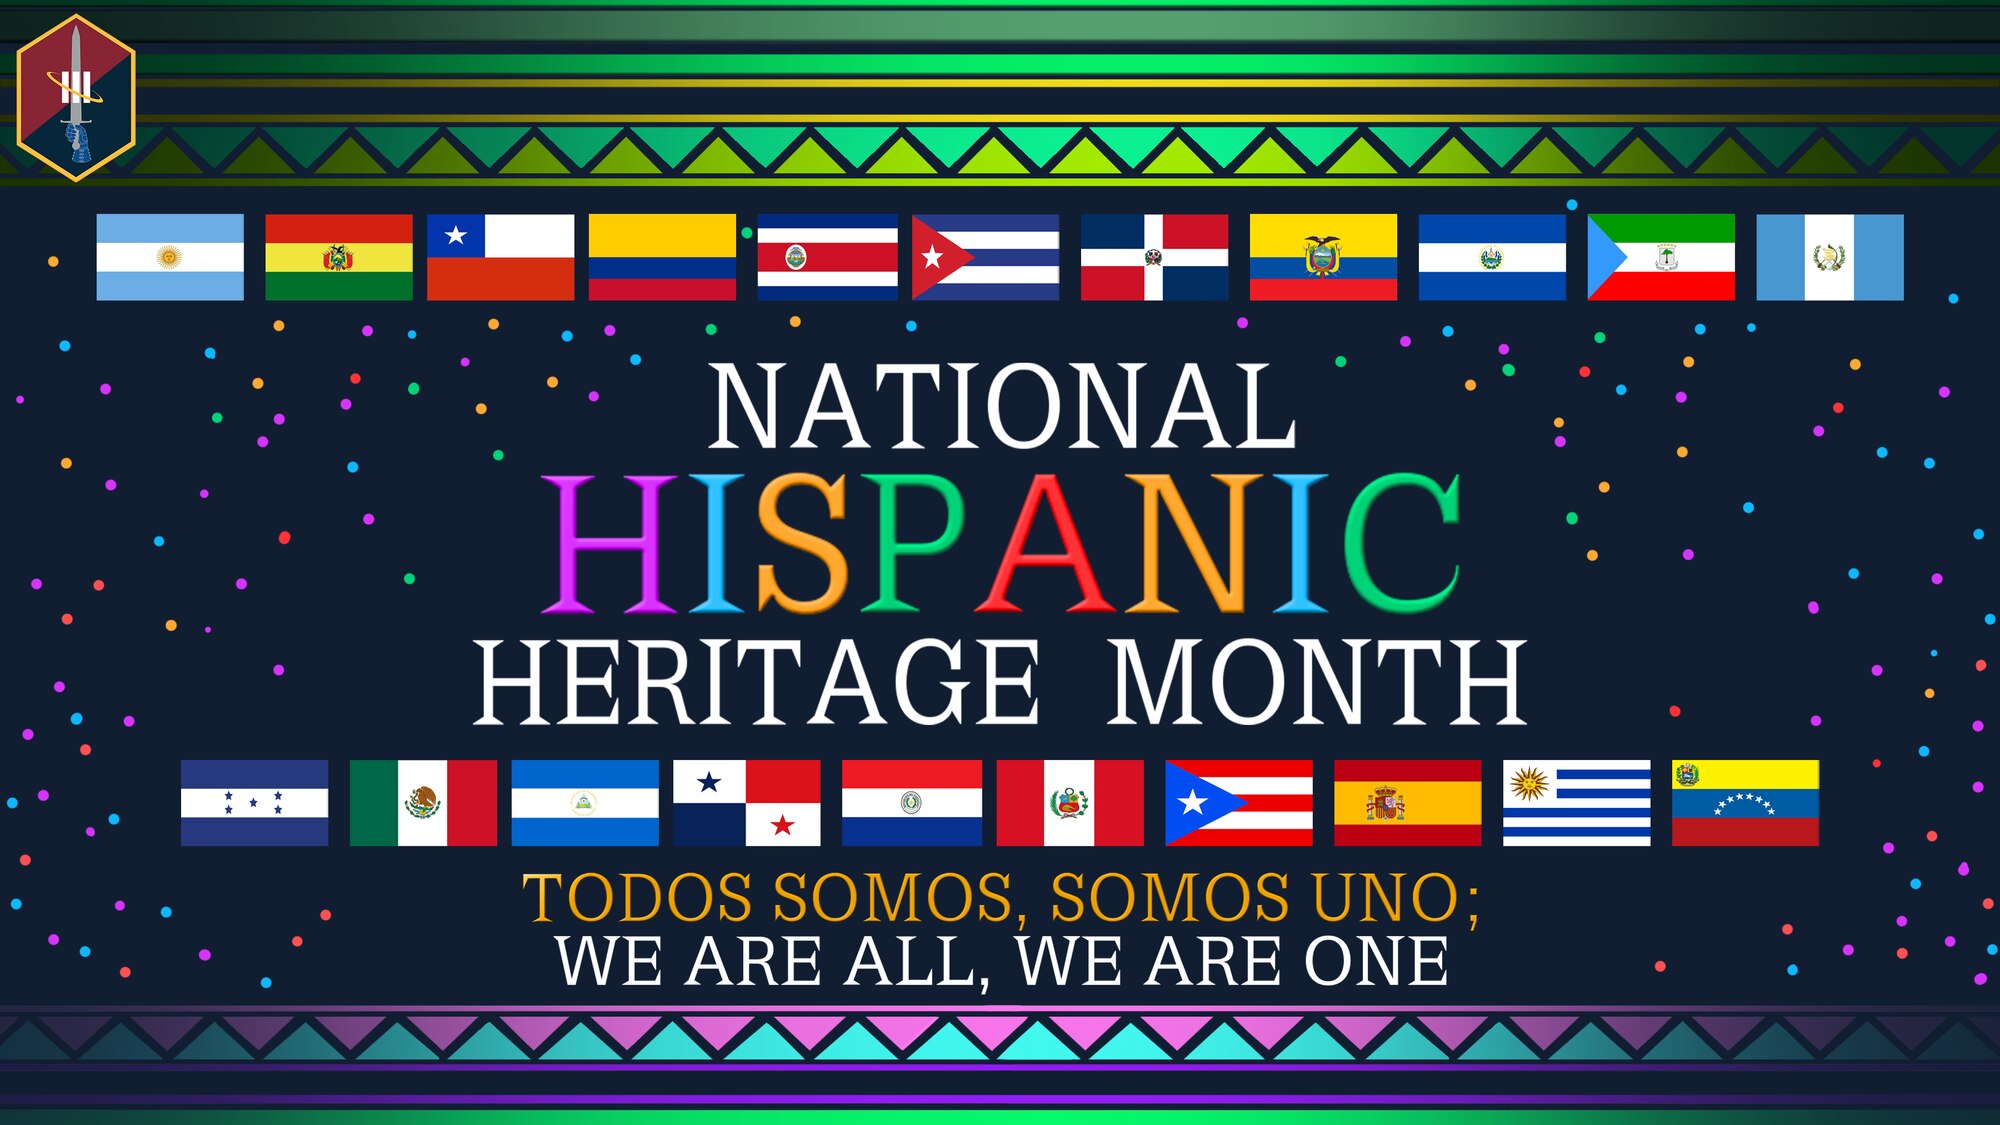 National Hispanic Heritage Month observance is September 15 – October 15.